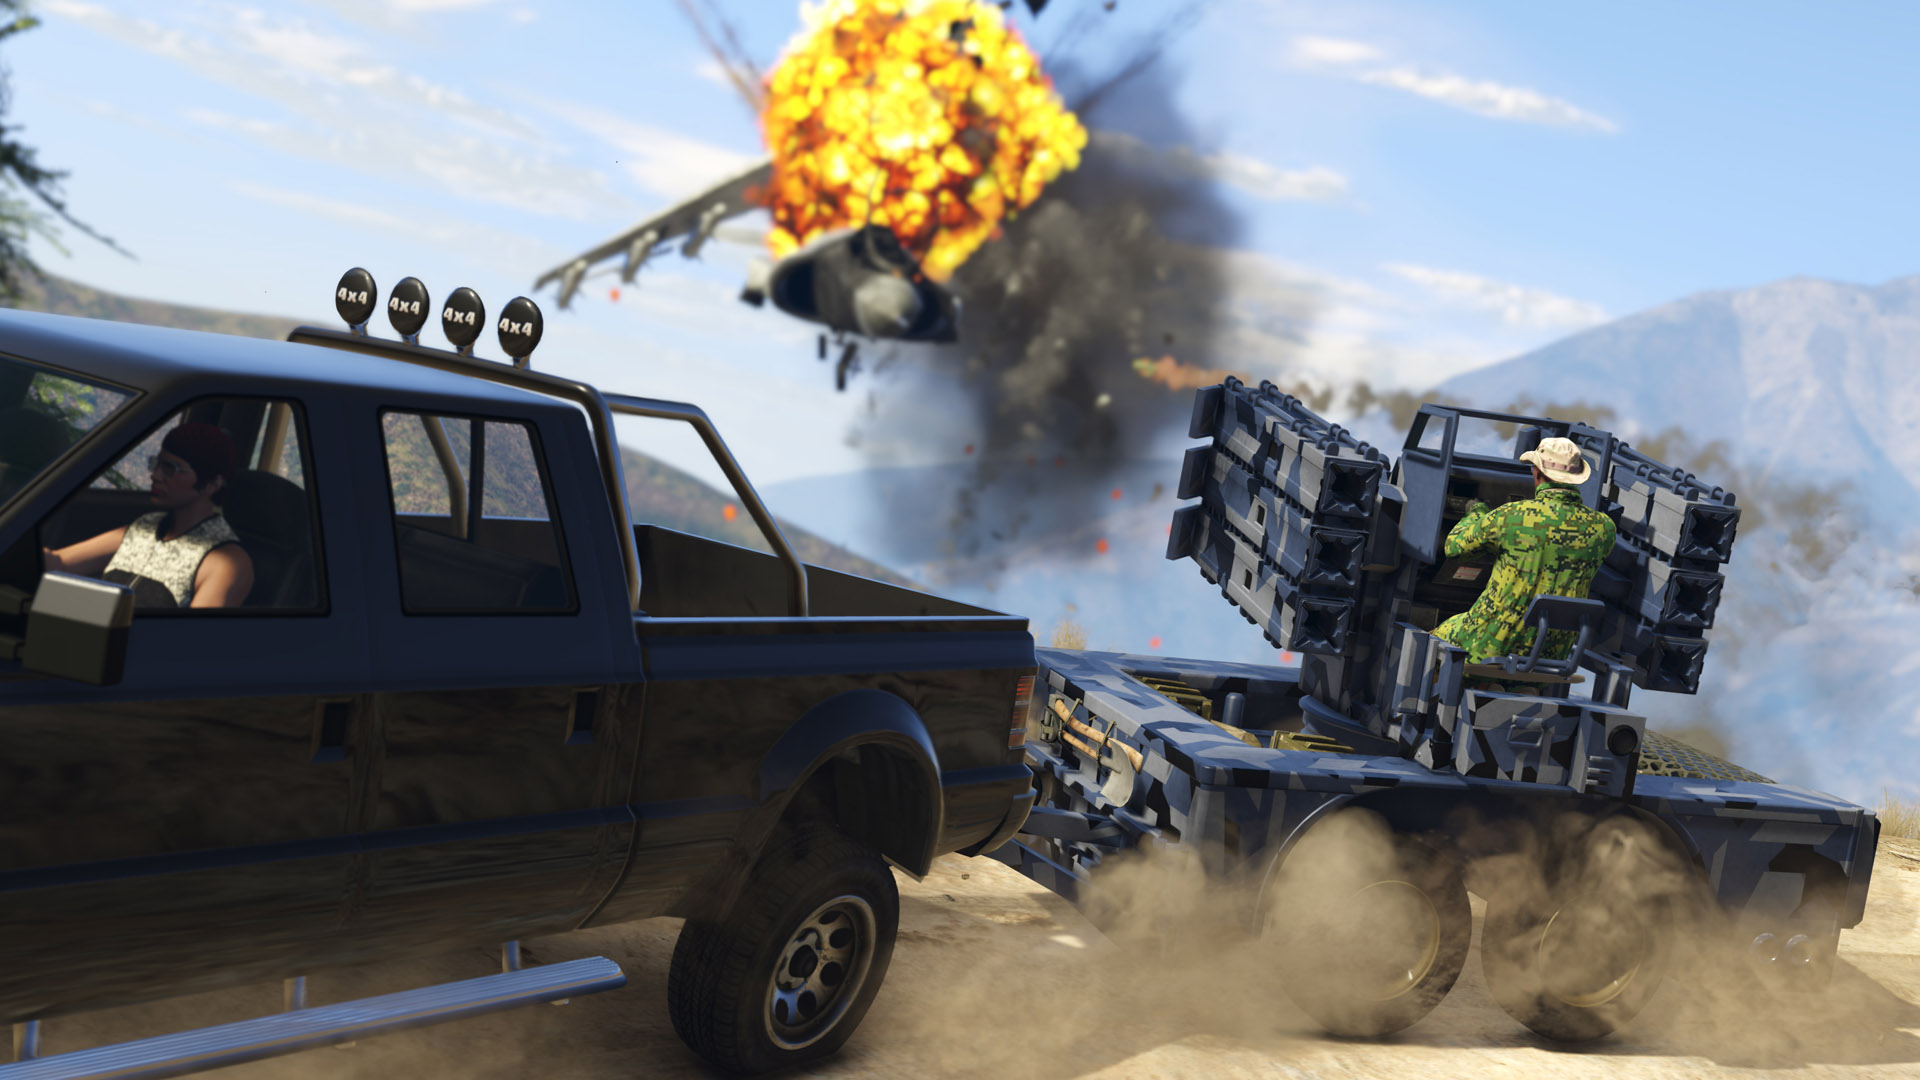 GTA 5 stock market: A man using an anti-aircraft gun attached to a car to blow up a plane.